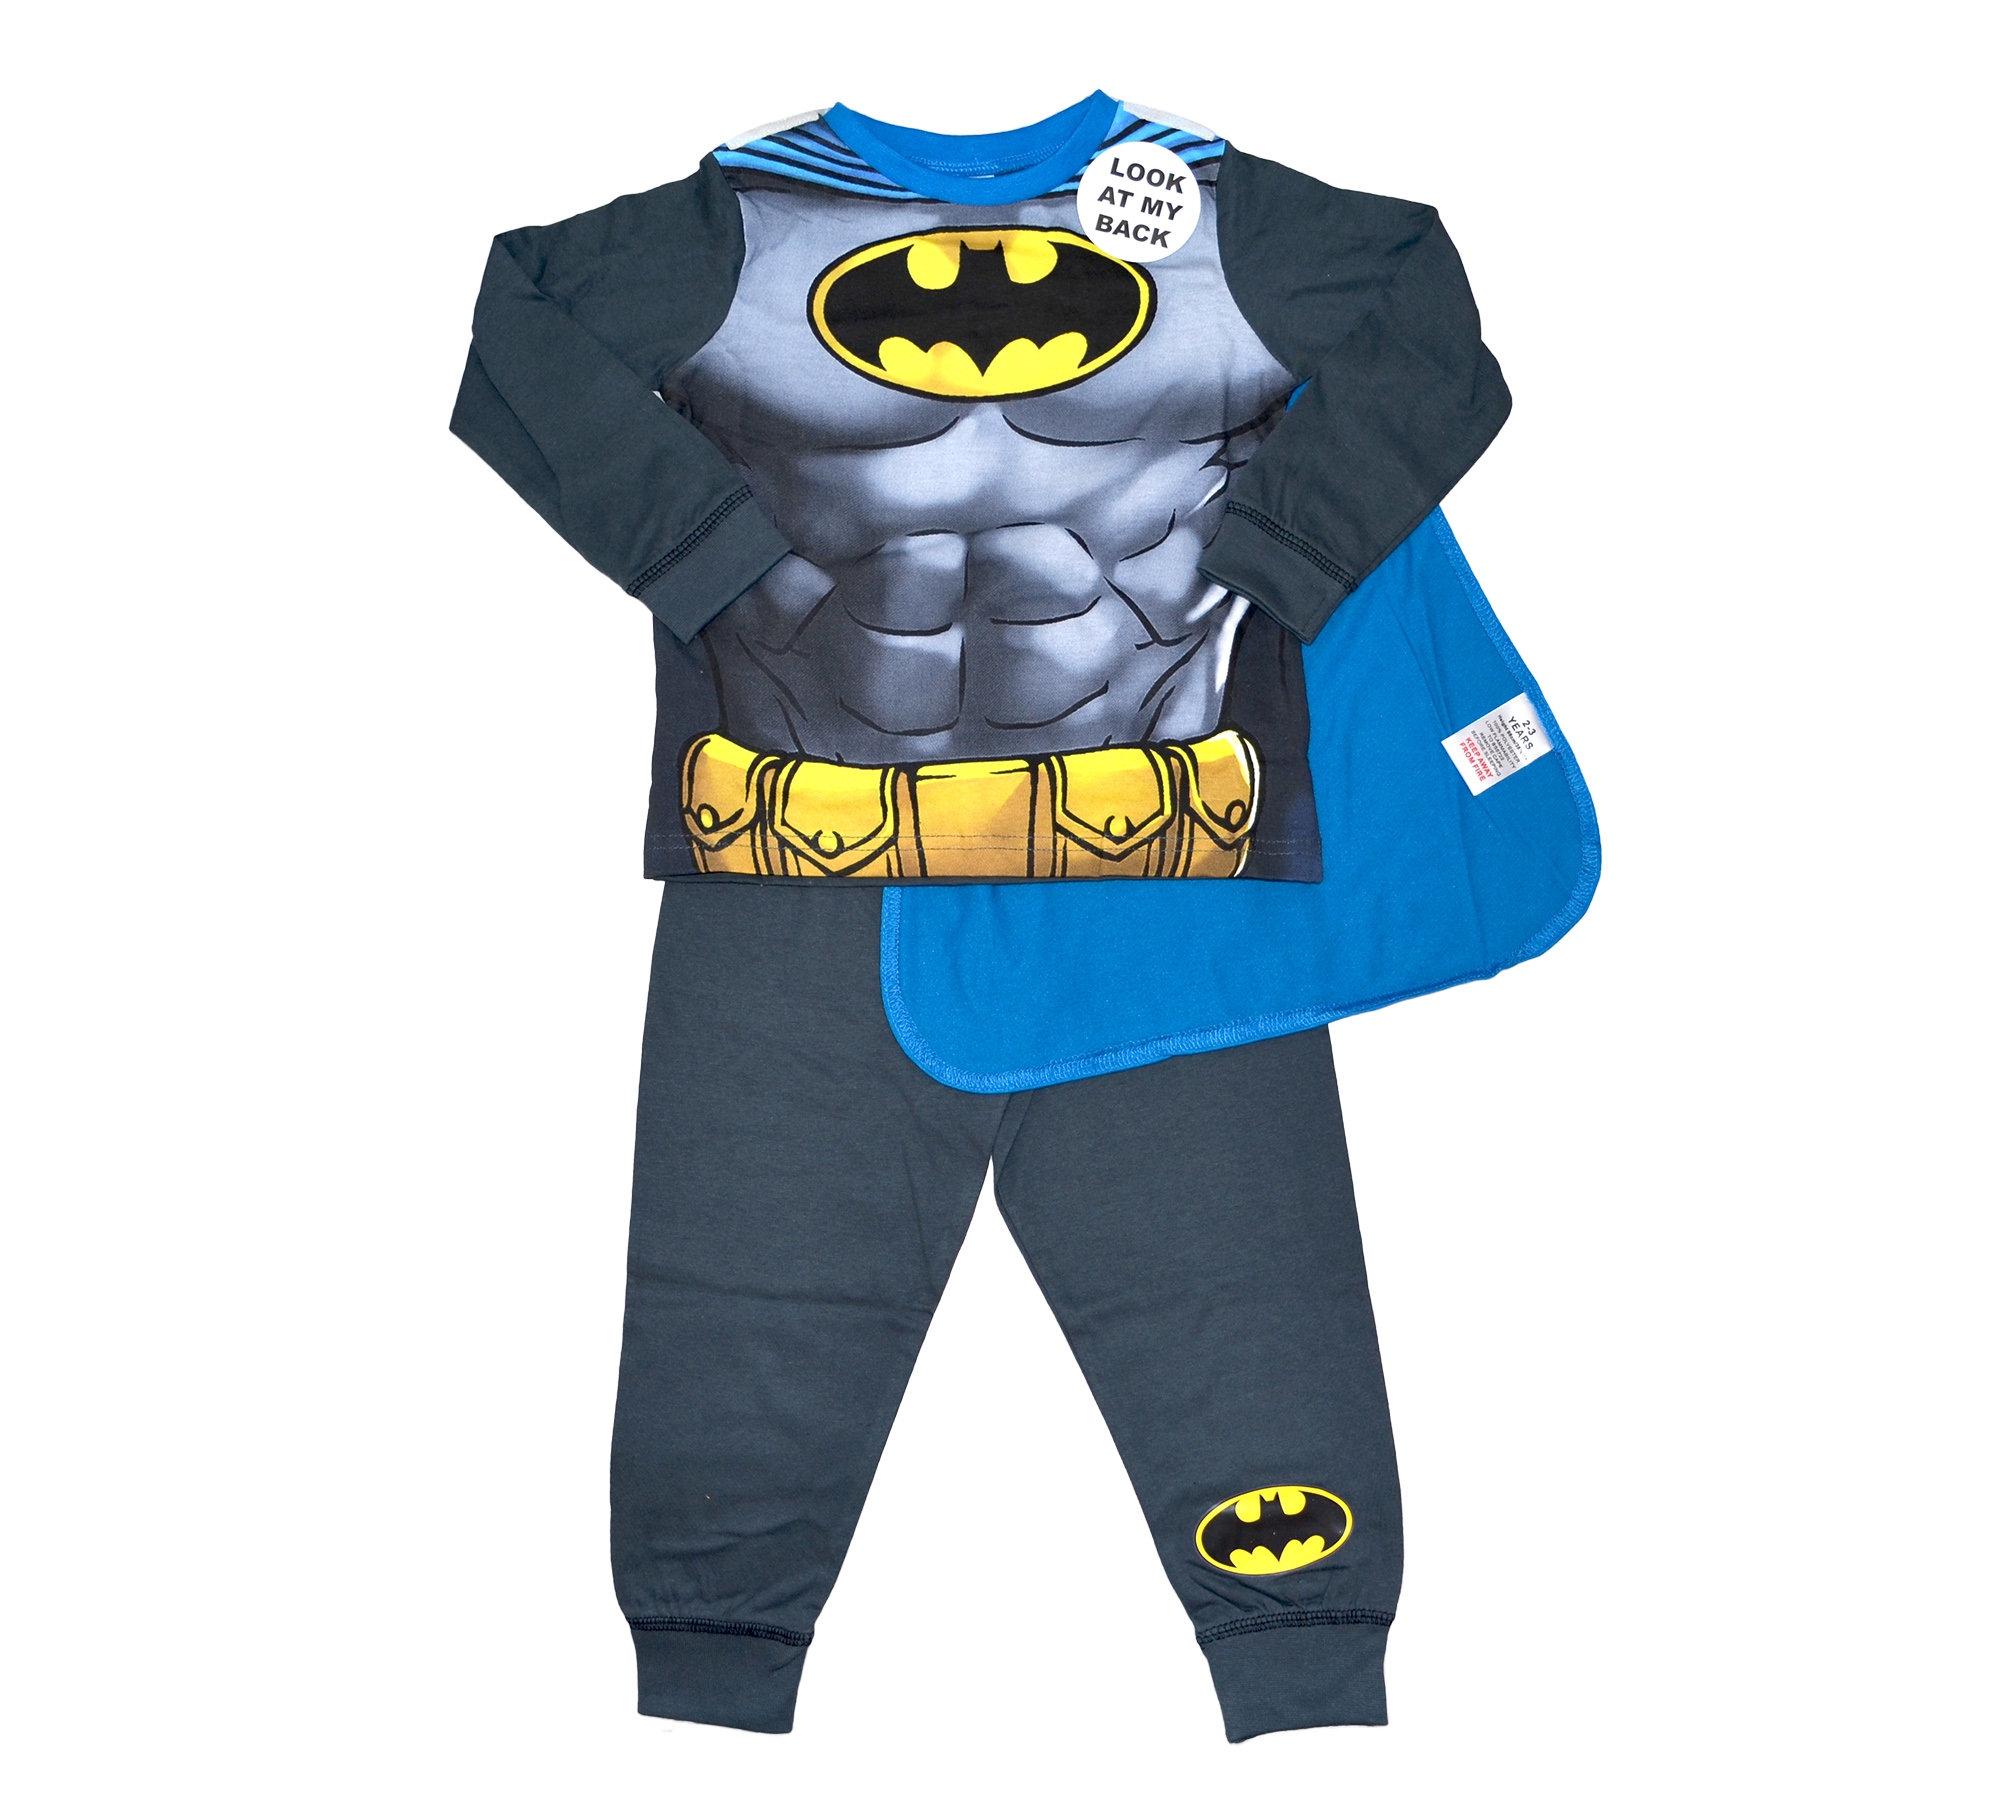 Batman 'Knight' Boys Novelty Pyjama Set 7-8 Years